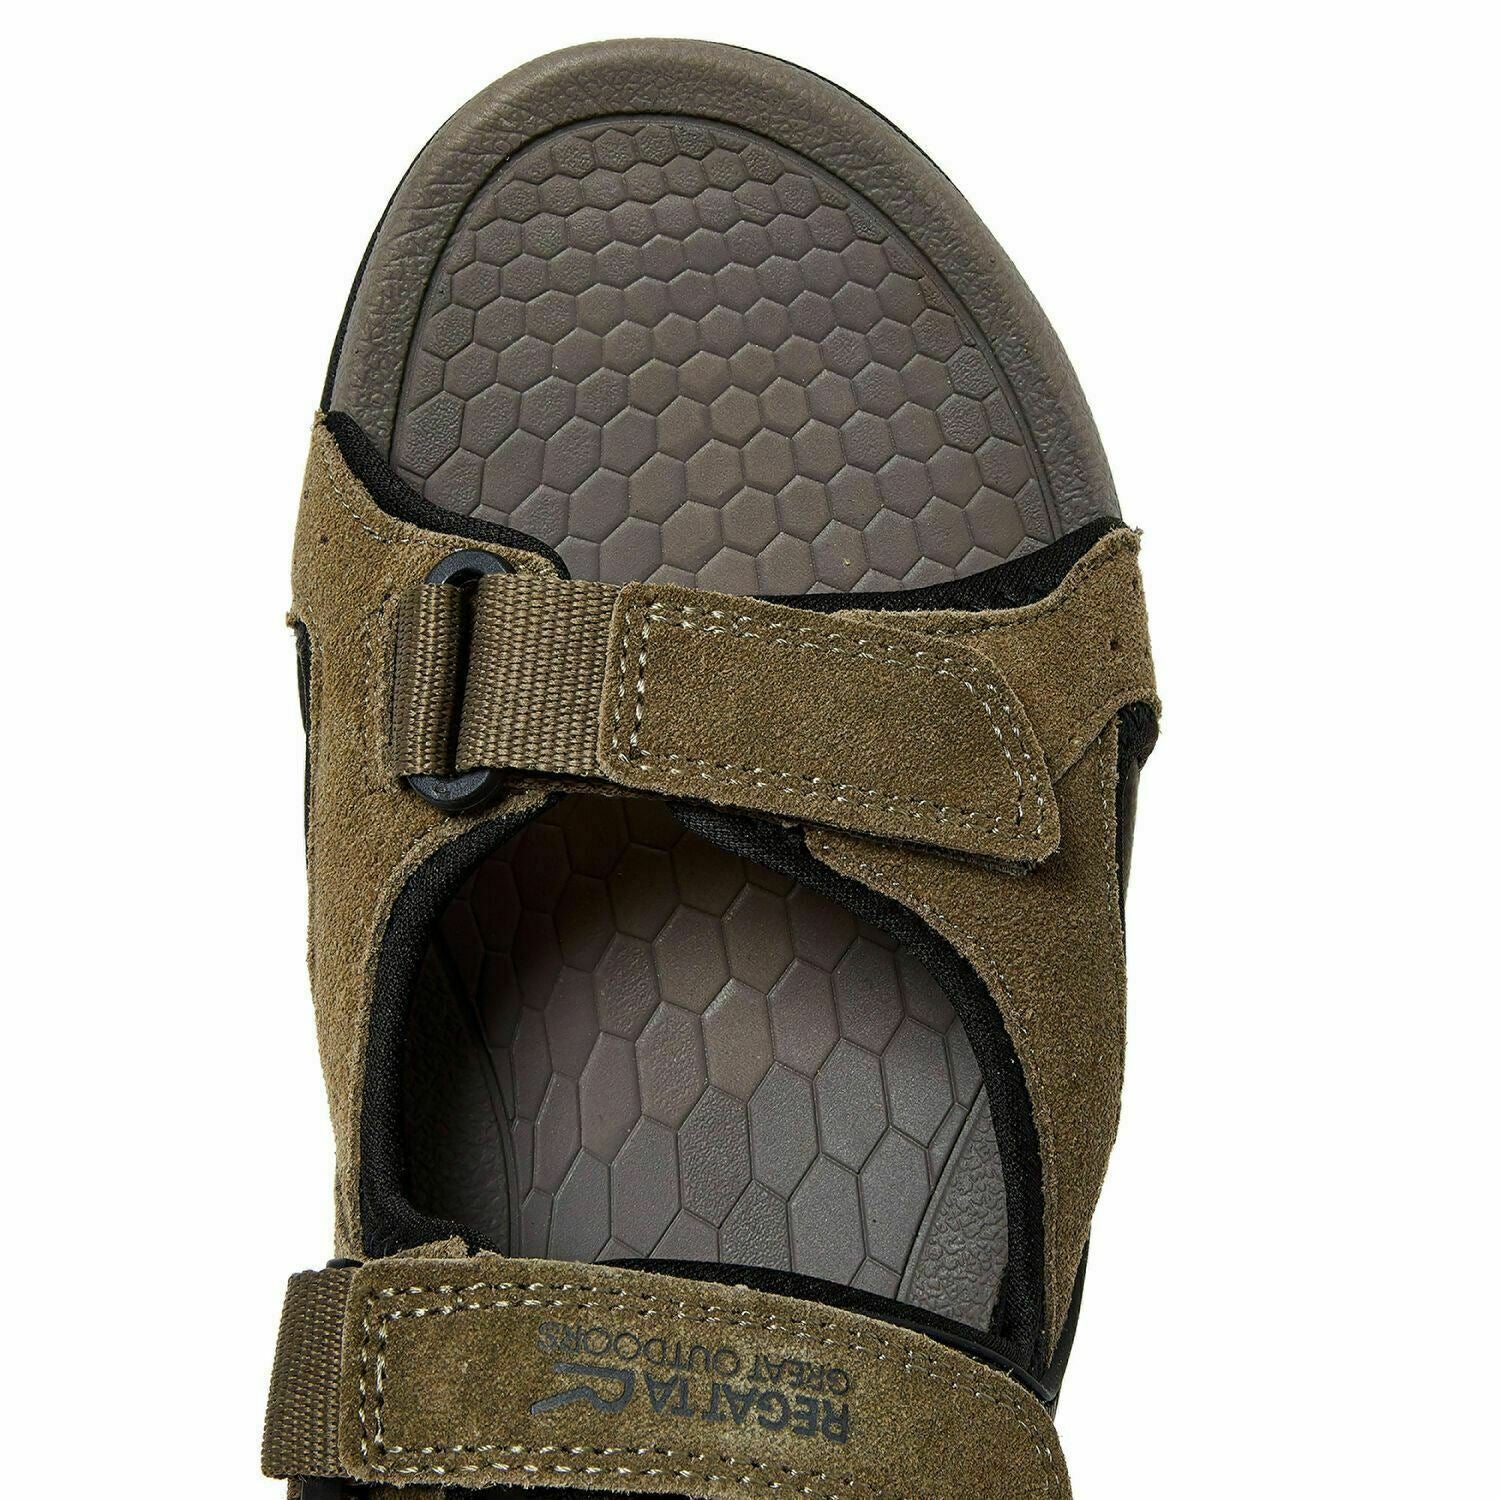 REGATTA Men's RAFTA Sport Sandals, Treetop/Black, size UK 7 EU 41